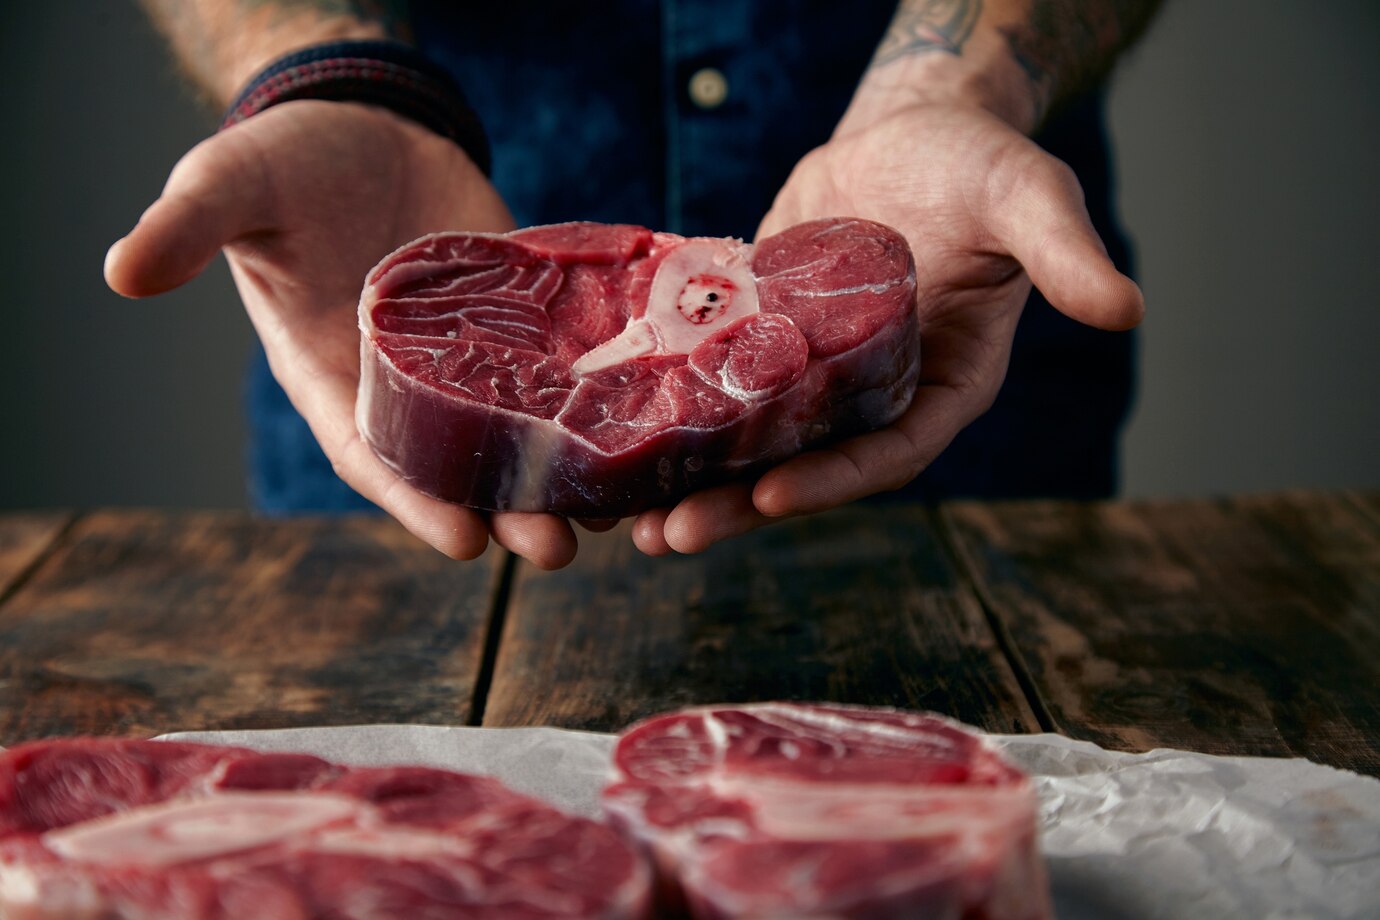 files/hands-offer-piece-great-meat-steak-with-bone_346278-537.jpg